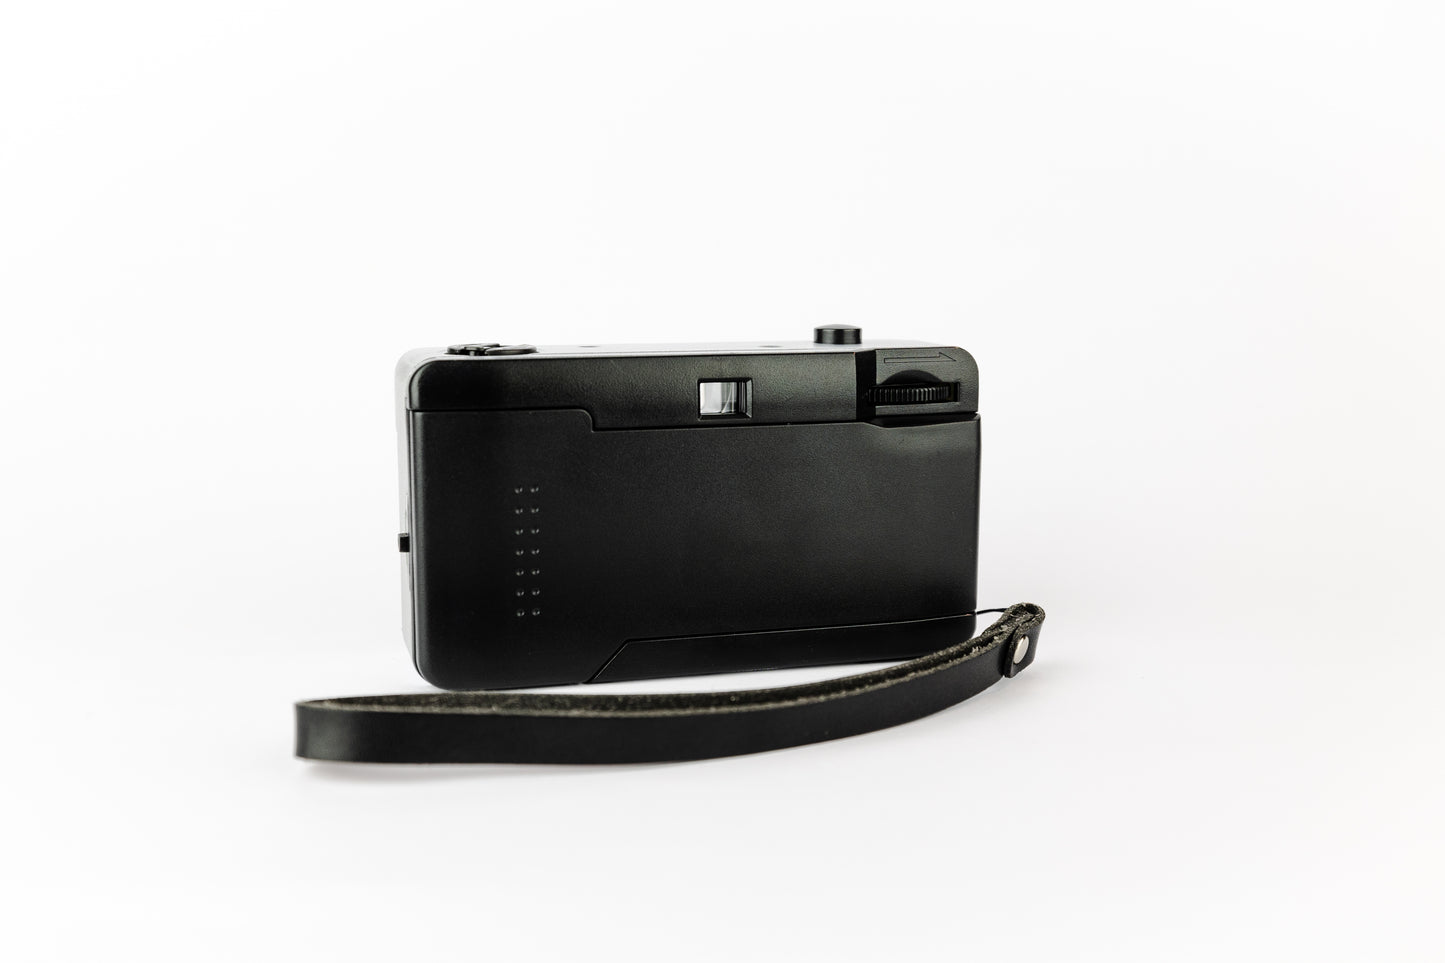 Vintage Reusable Film Camera - Black